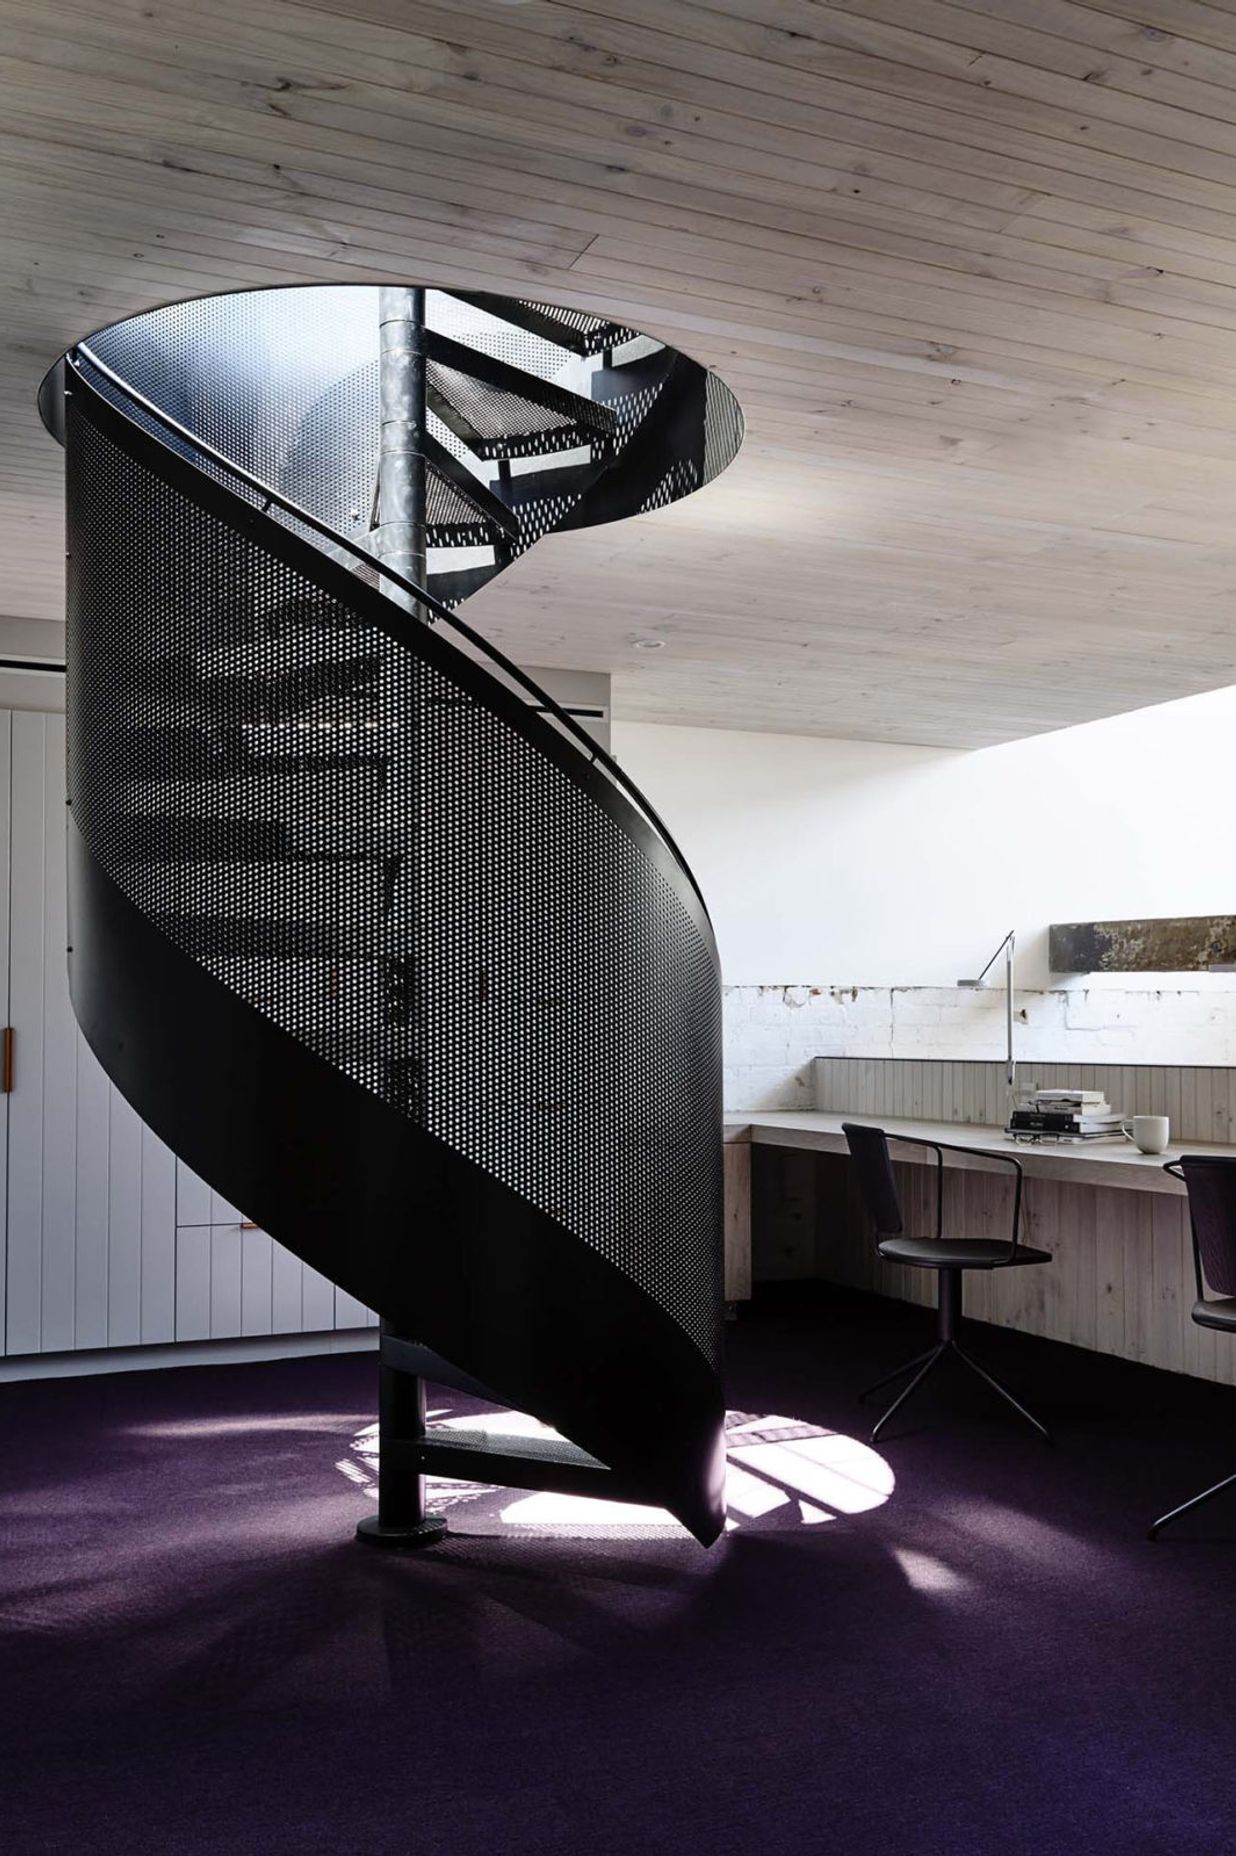  Fitzroy Loft by Architects EAT | Photography by Derek Swalwell